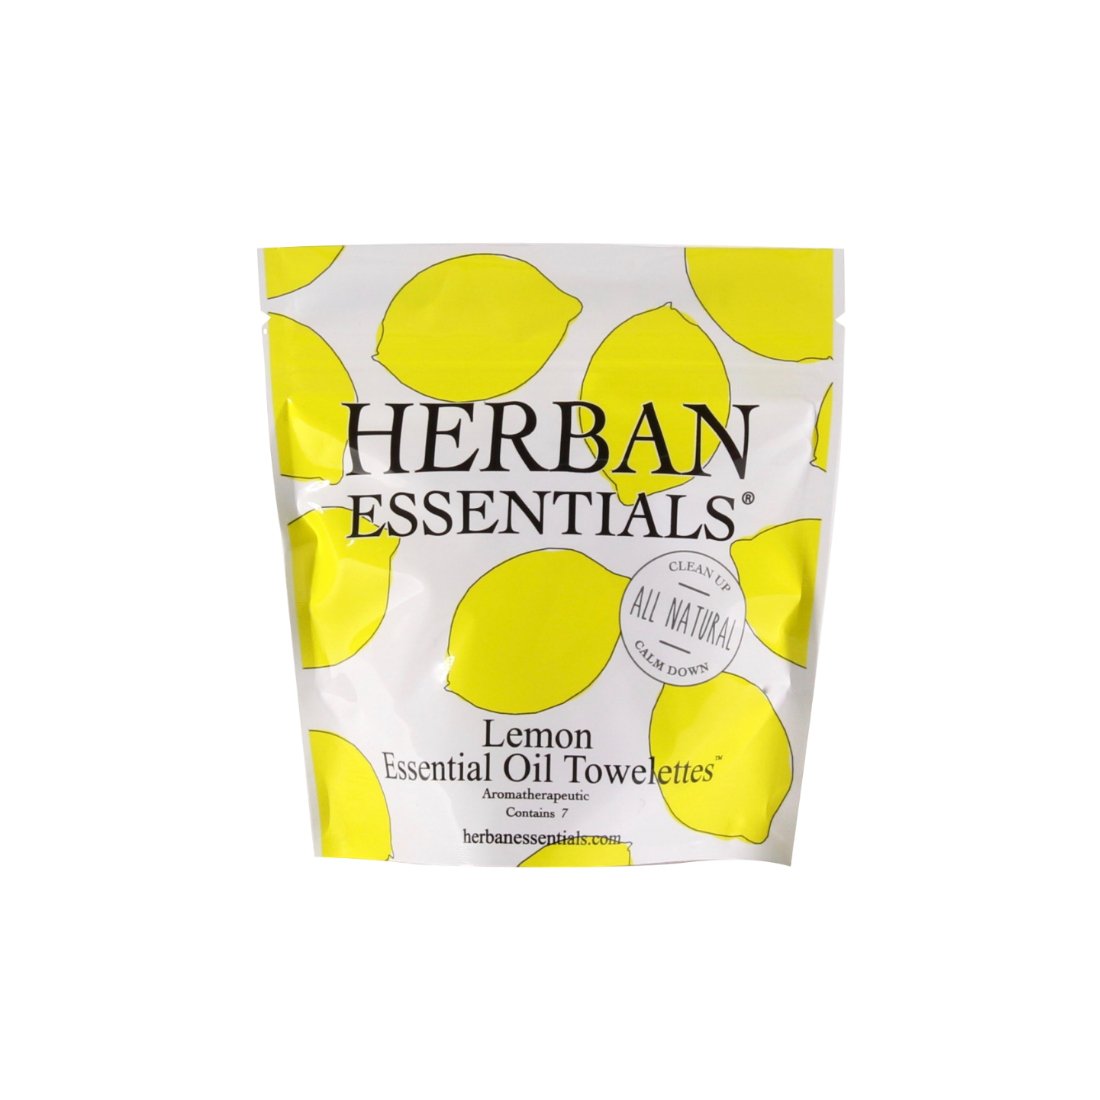 Herban Essentials Hand Wipes 7 Count